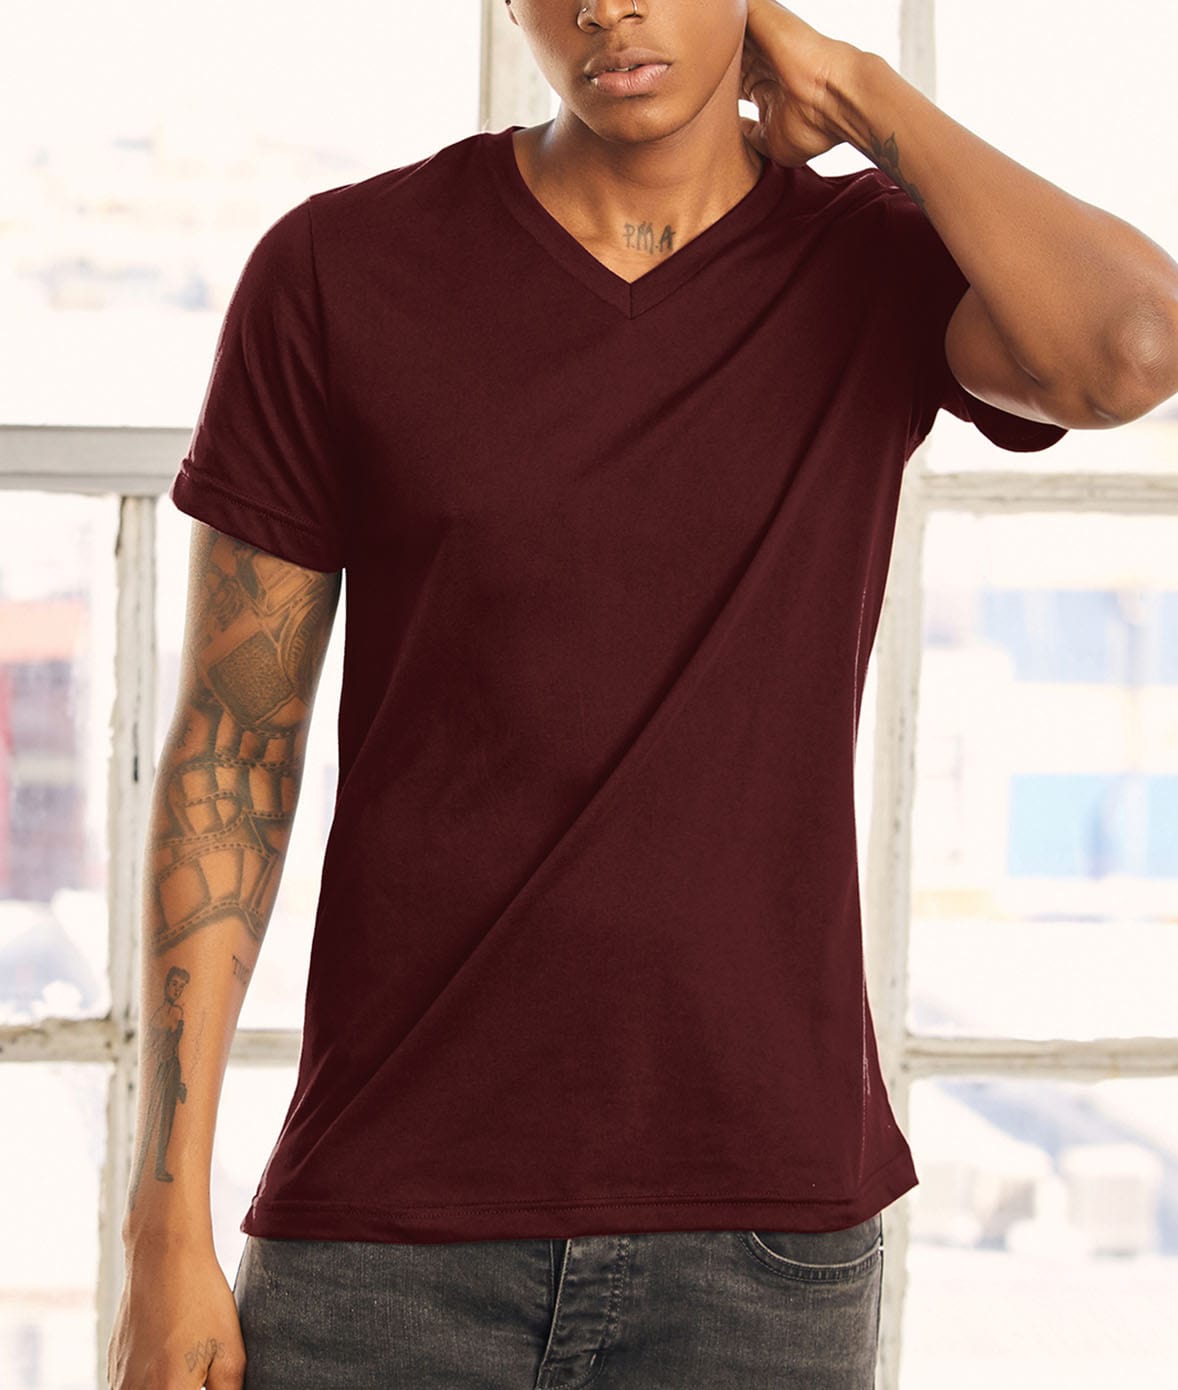 Men's Classic Soft Heathered Short Sleeve V-Neck T-Shirt Worn by Model